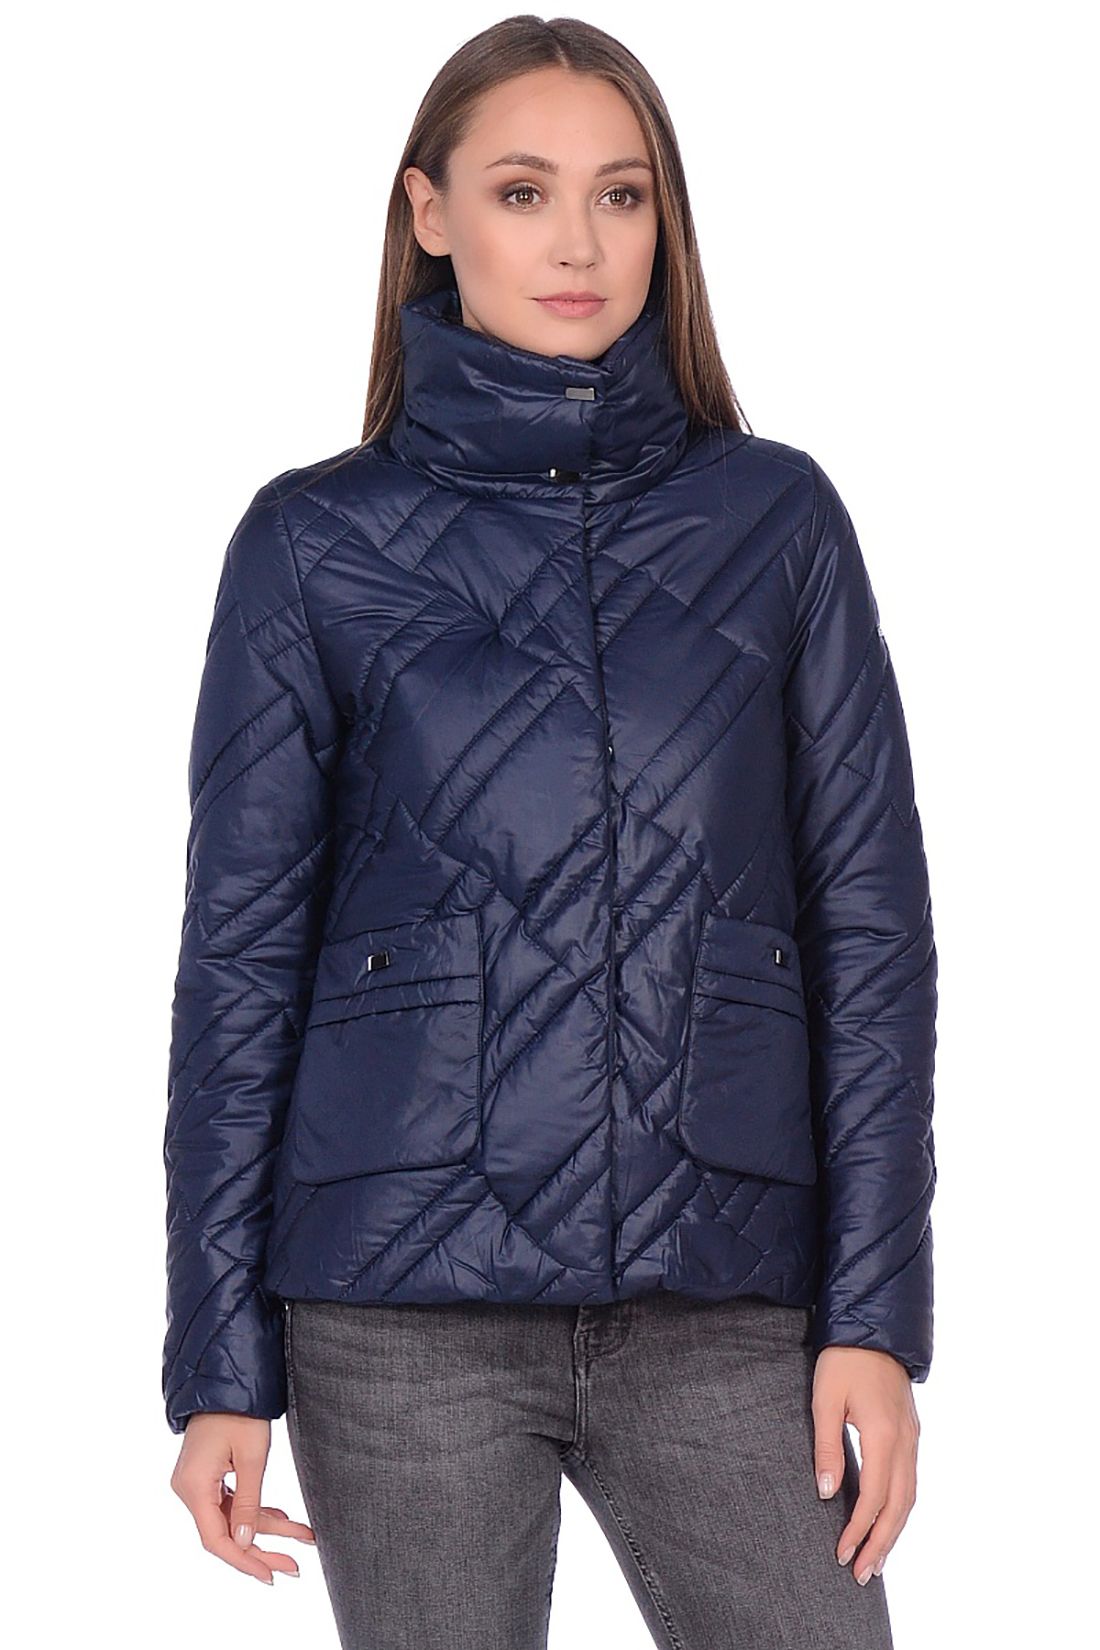 Укороченная куртка с простёжкой (арт. baon B039502), размер M, цвет синий Укороченная куртка с простёжкой (арт. baon B039502) - фото 1